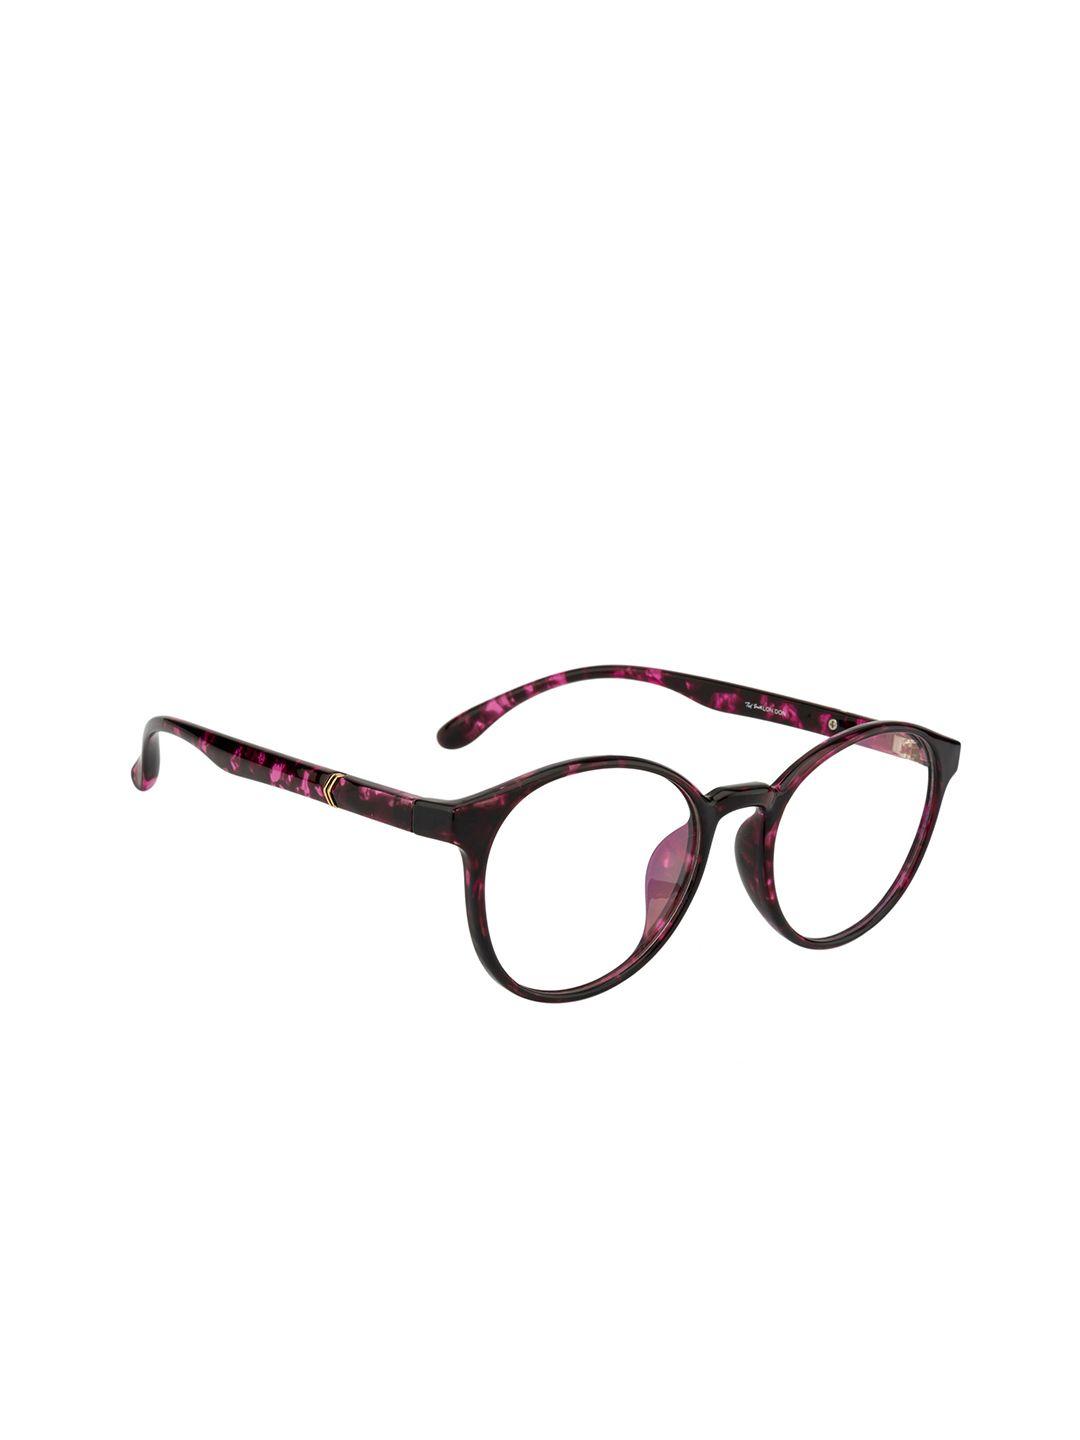 ted smith unisex purple & pink full rim round frames eyeglasses